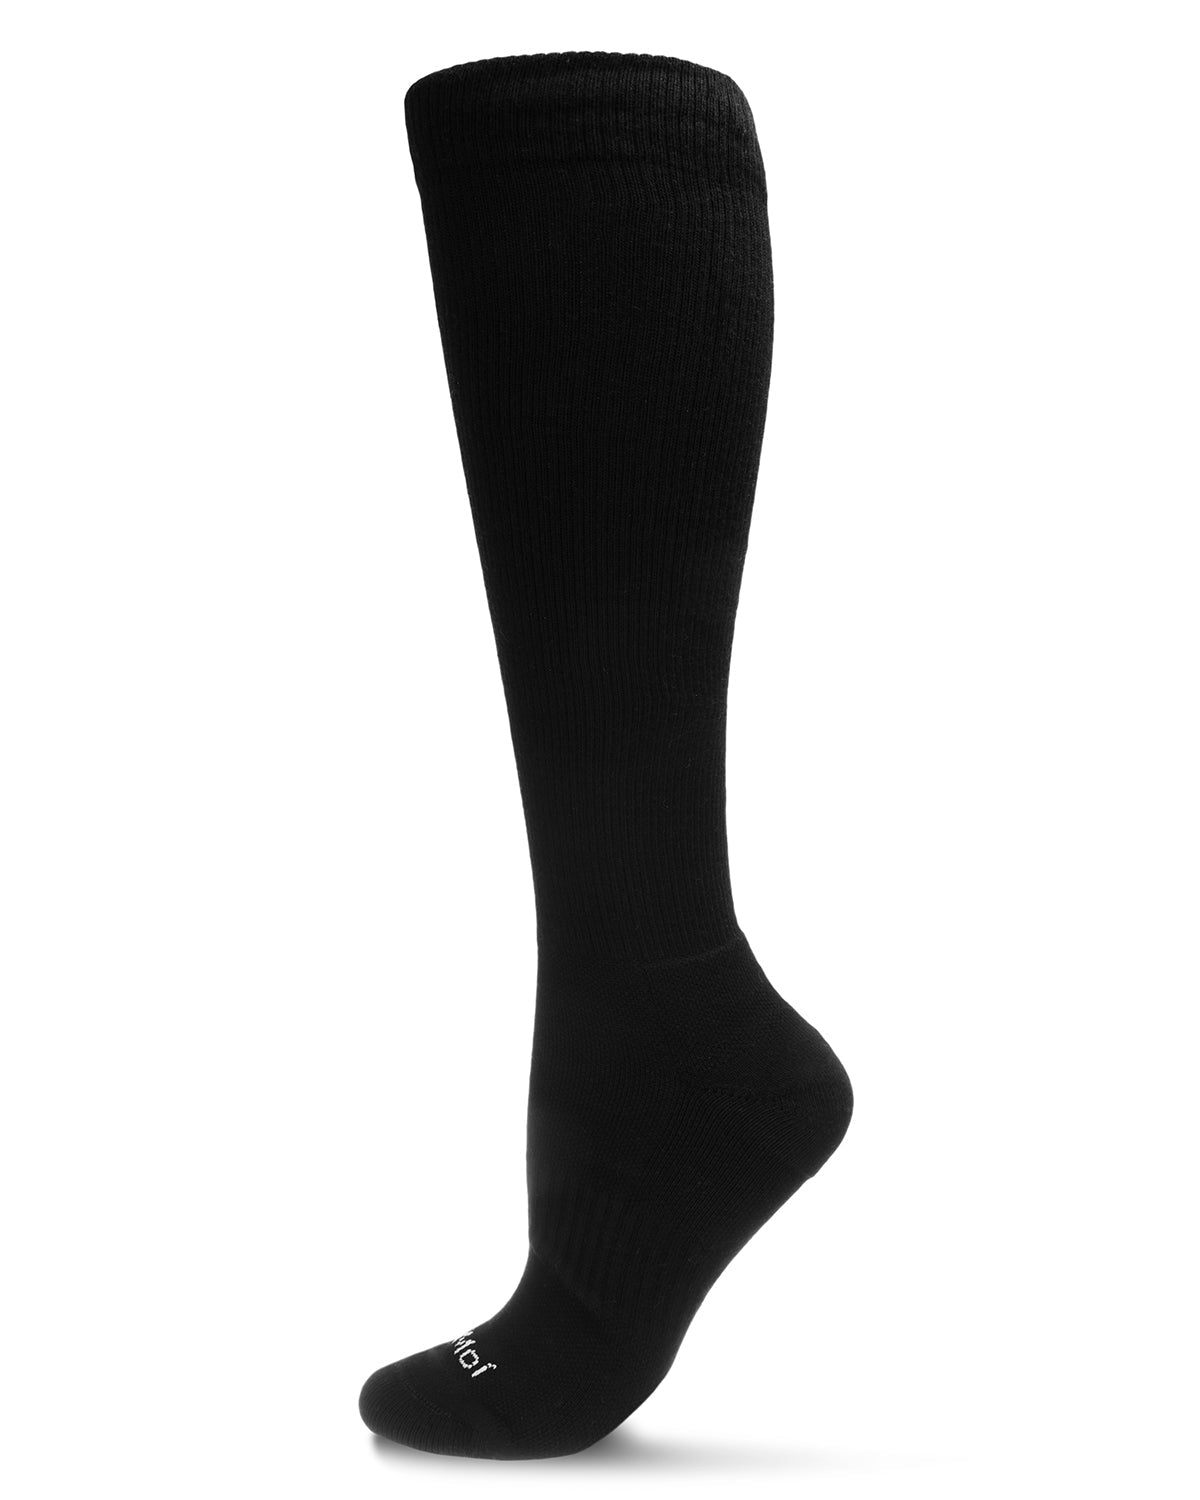 Unisex Classic Athletic Cushion Sole Knee High Cotton Blend 15-20mmHg Graduated Compression Socks